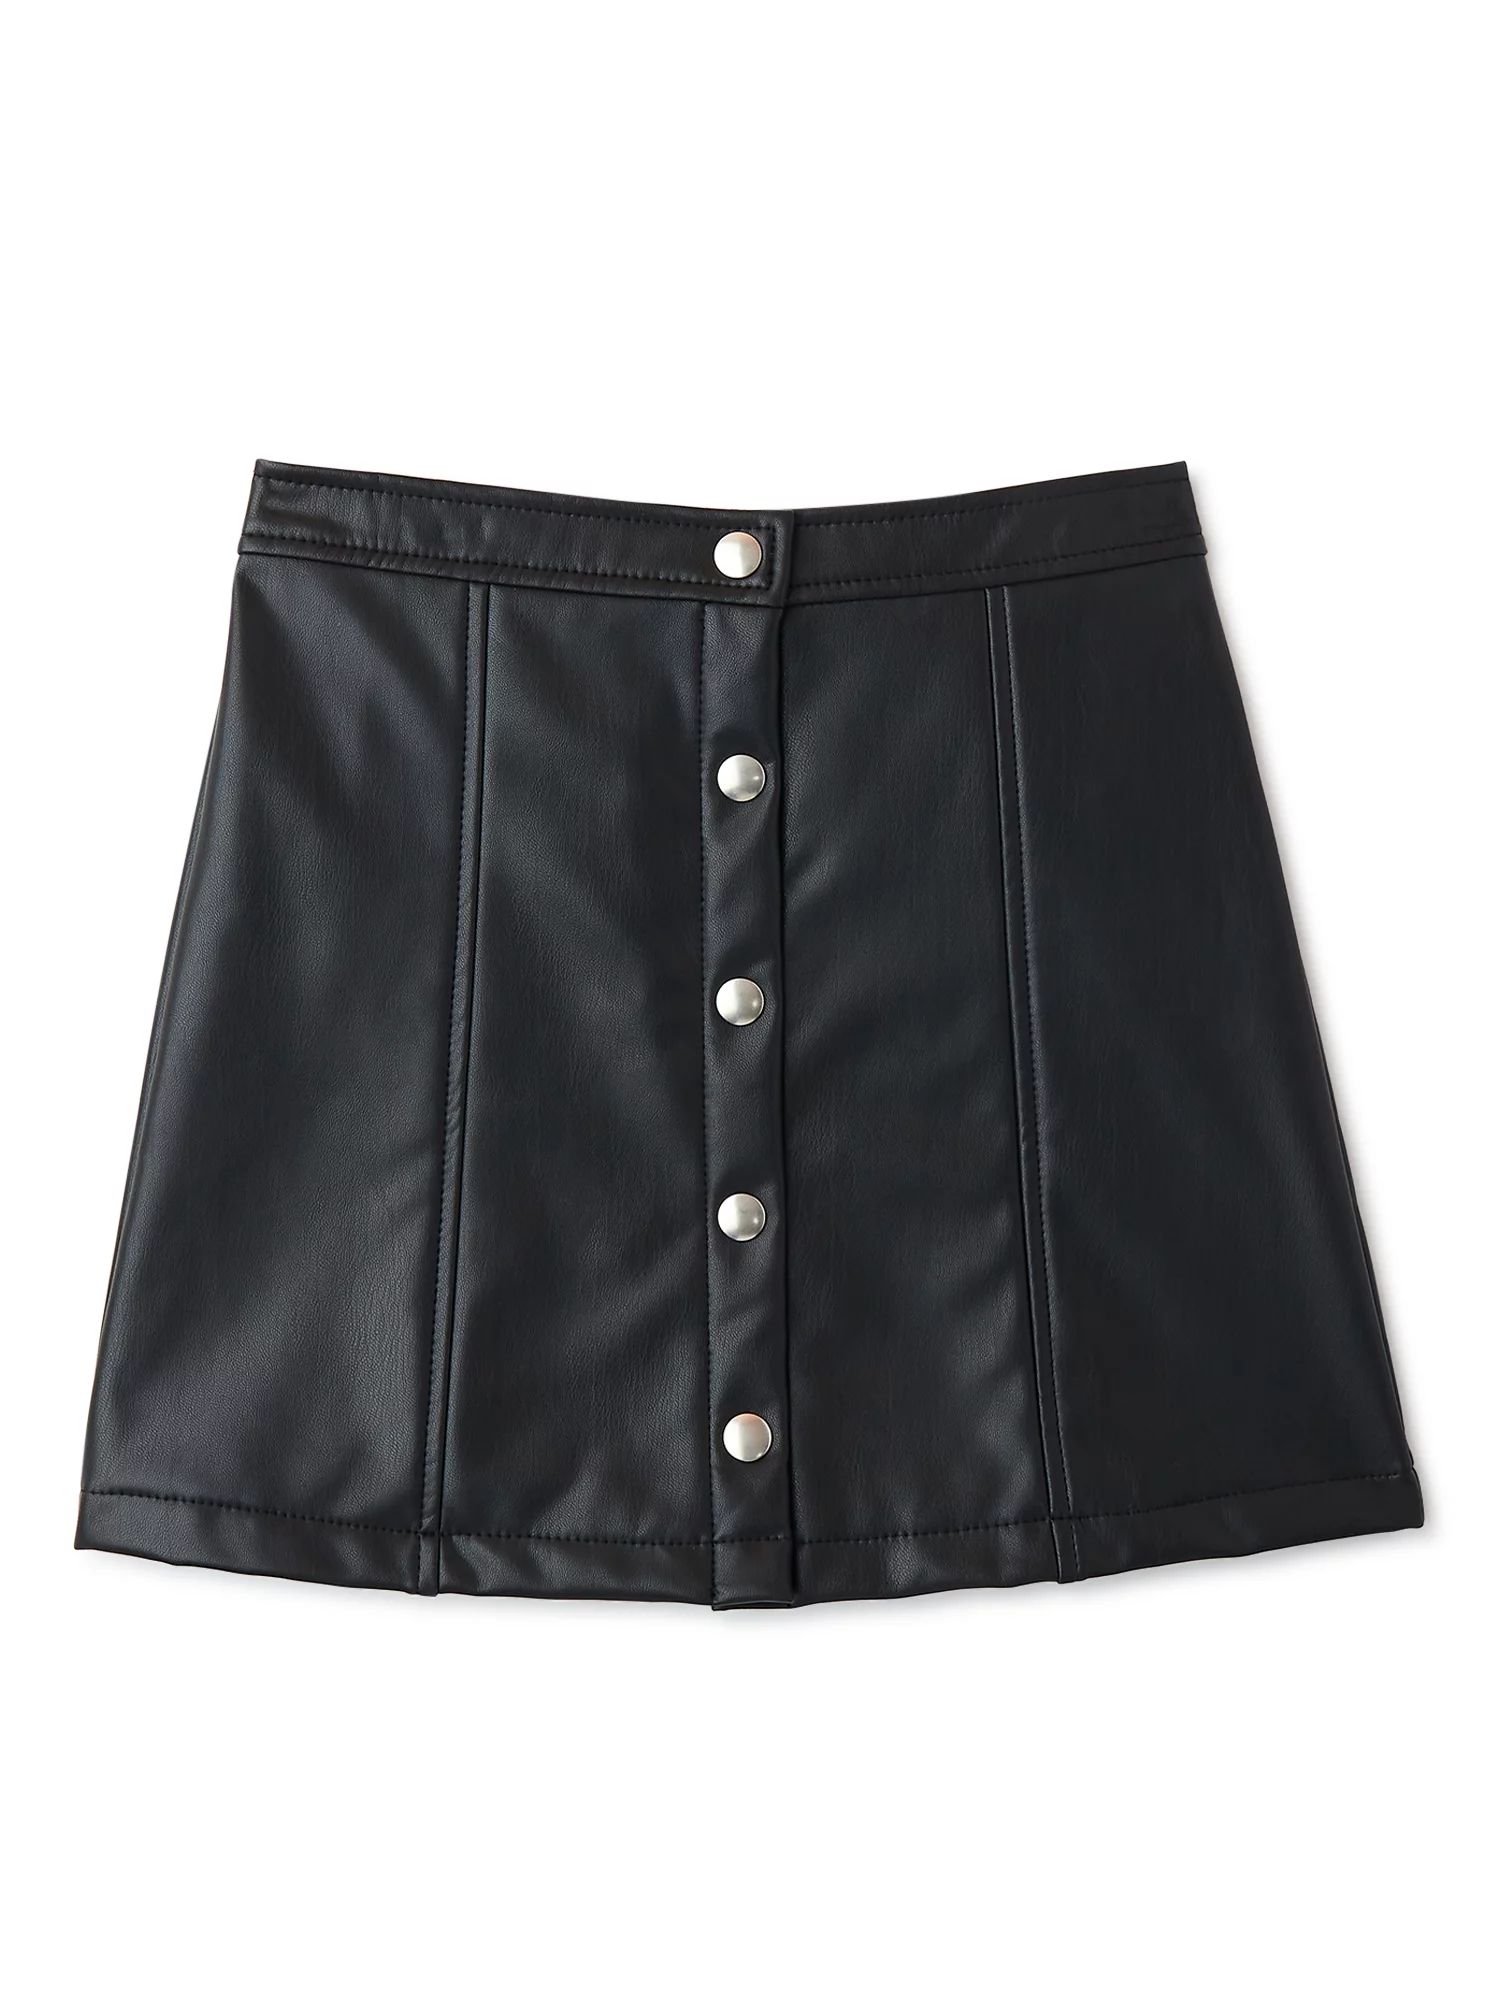 Wonder Nation Girls Faux Leather Skirt, Sizes 4-18 & Plus | Walmart (US)